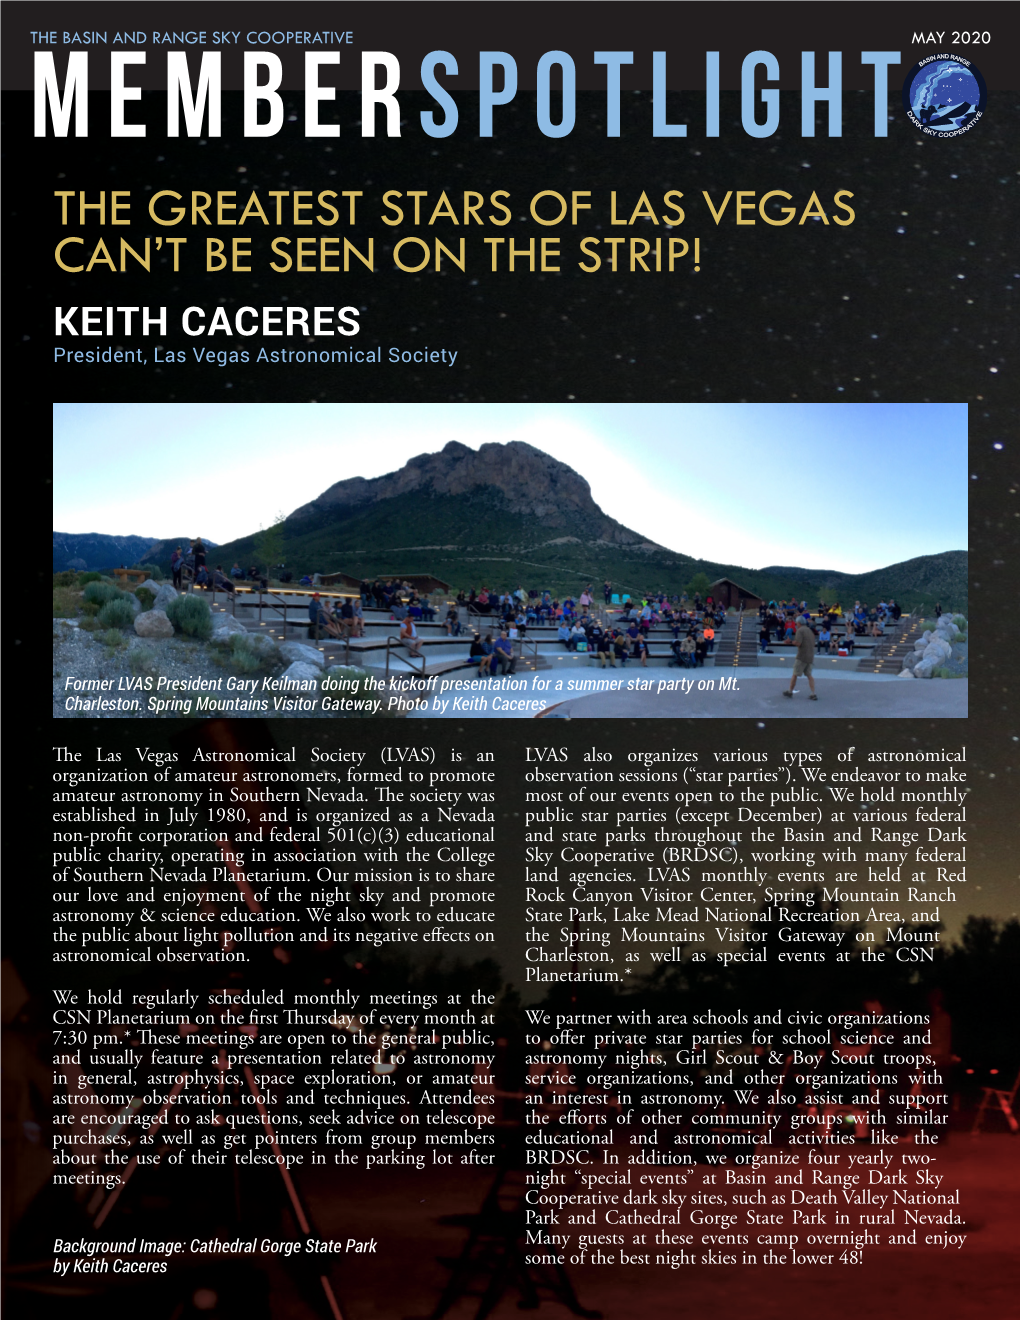 Las Vegas Astronomical Society